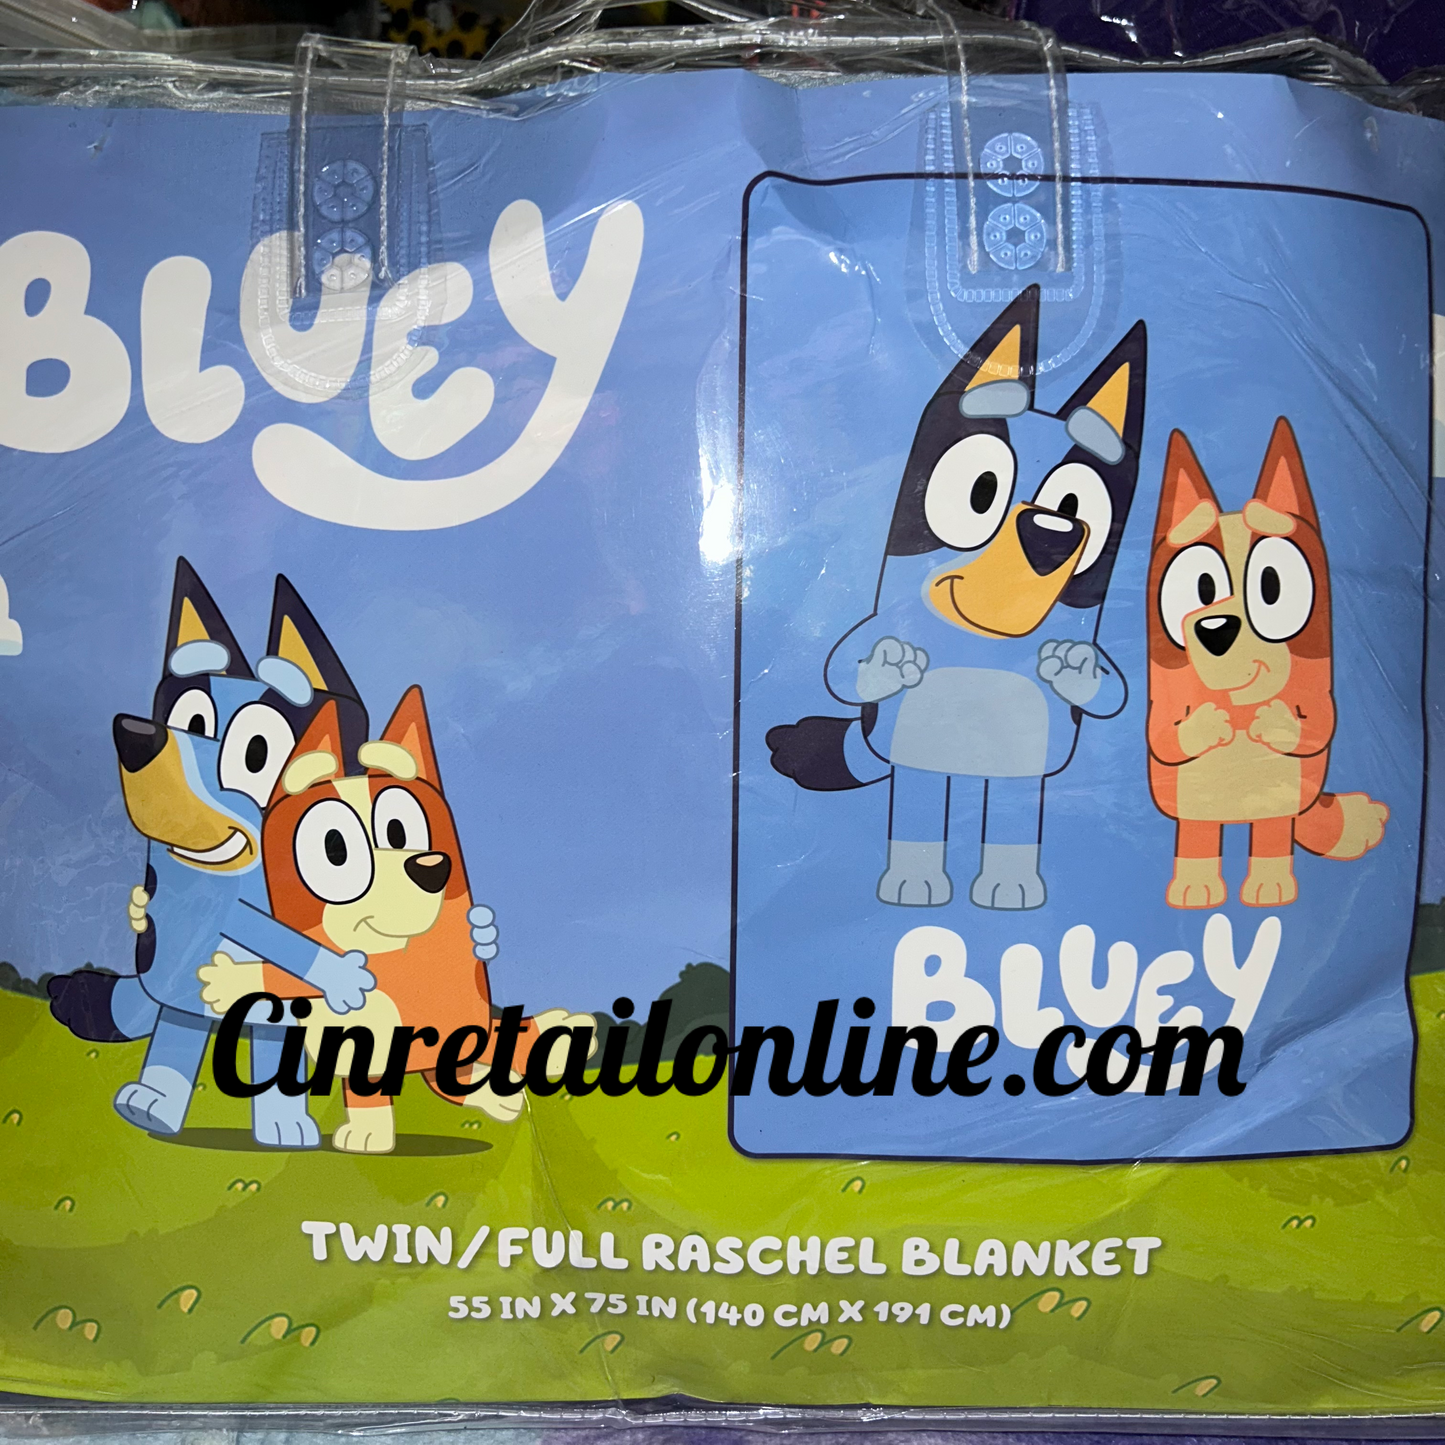 Bluey Twin/full blankets